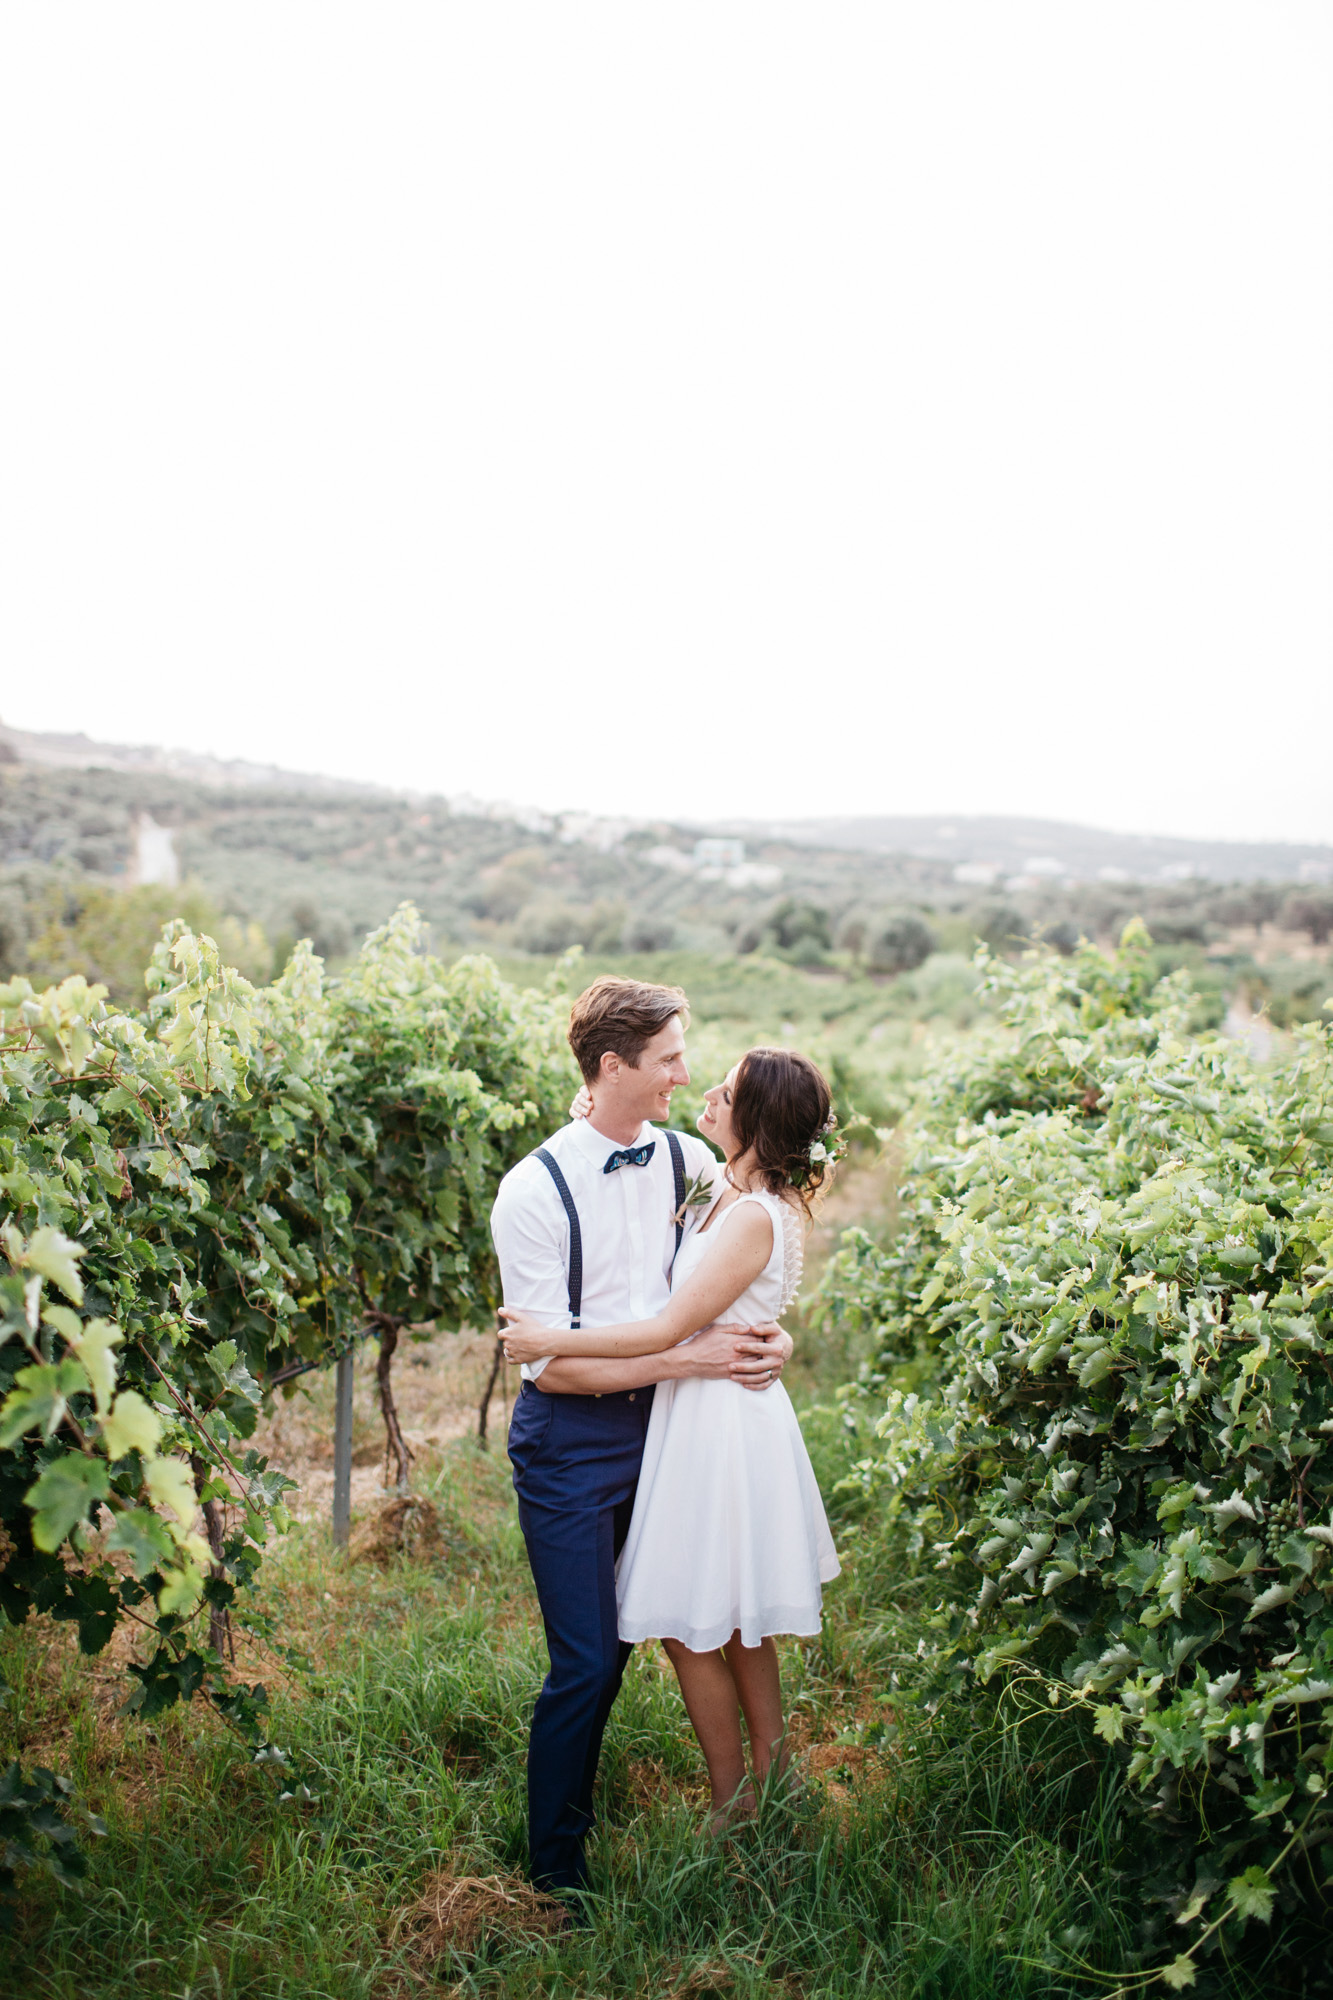 Happy newlyweds, bride and groom, at Grecotel Agreco Farm Crete Greece.